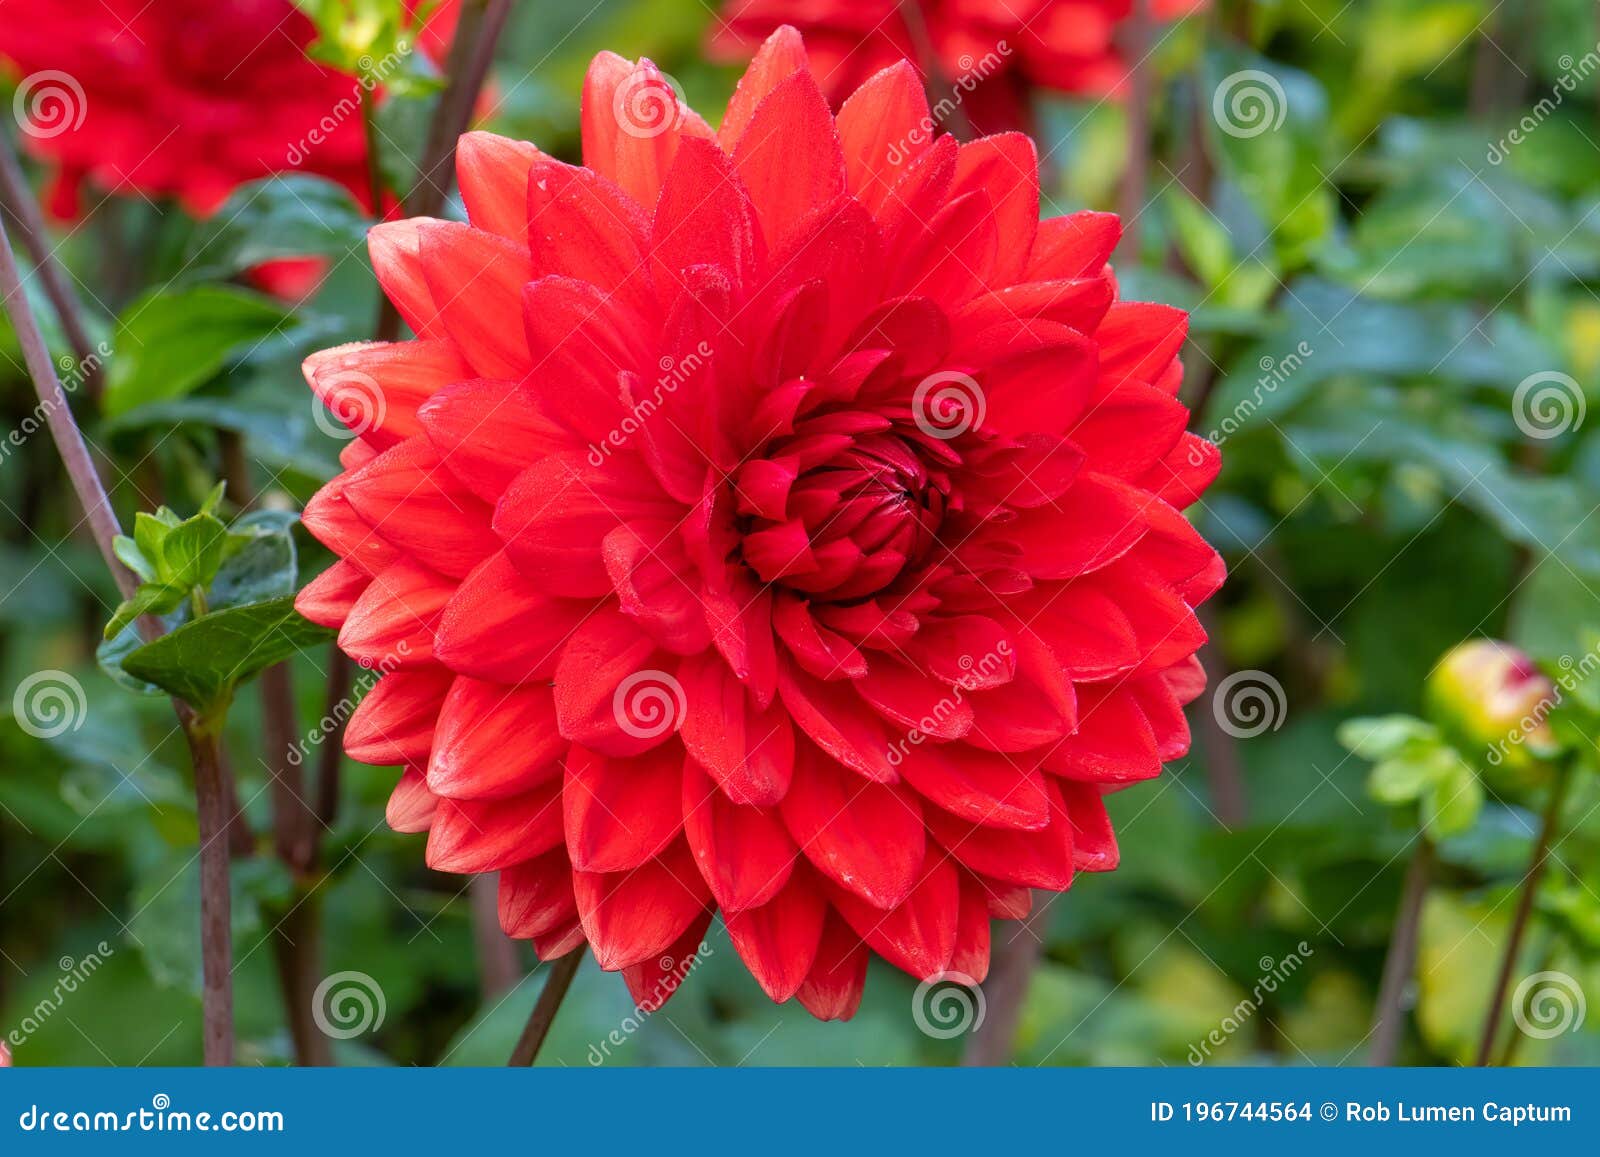 vibrant double-size red flower of dahlia garden wonder